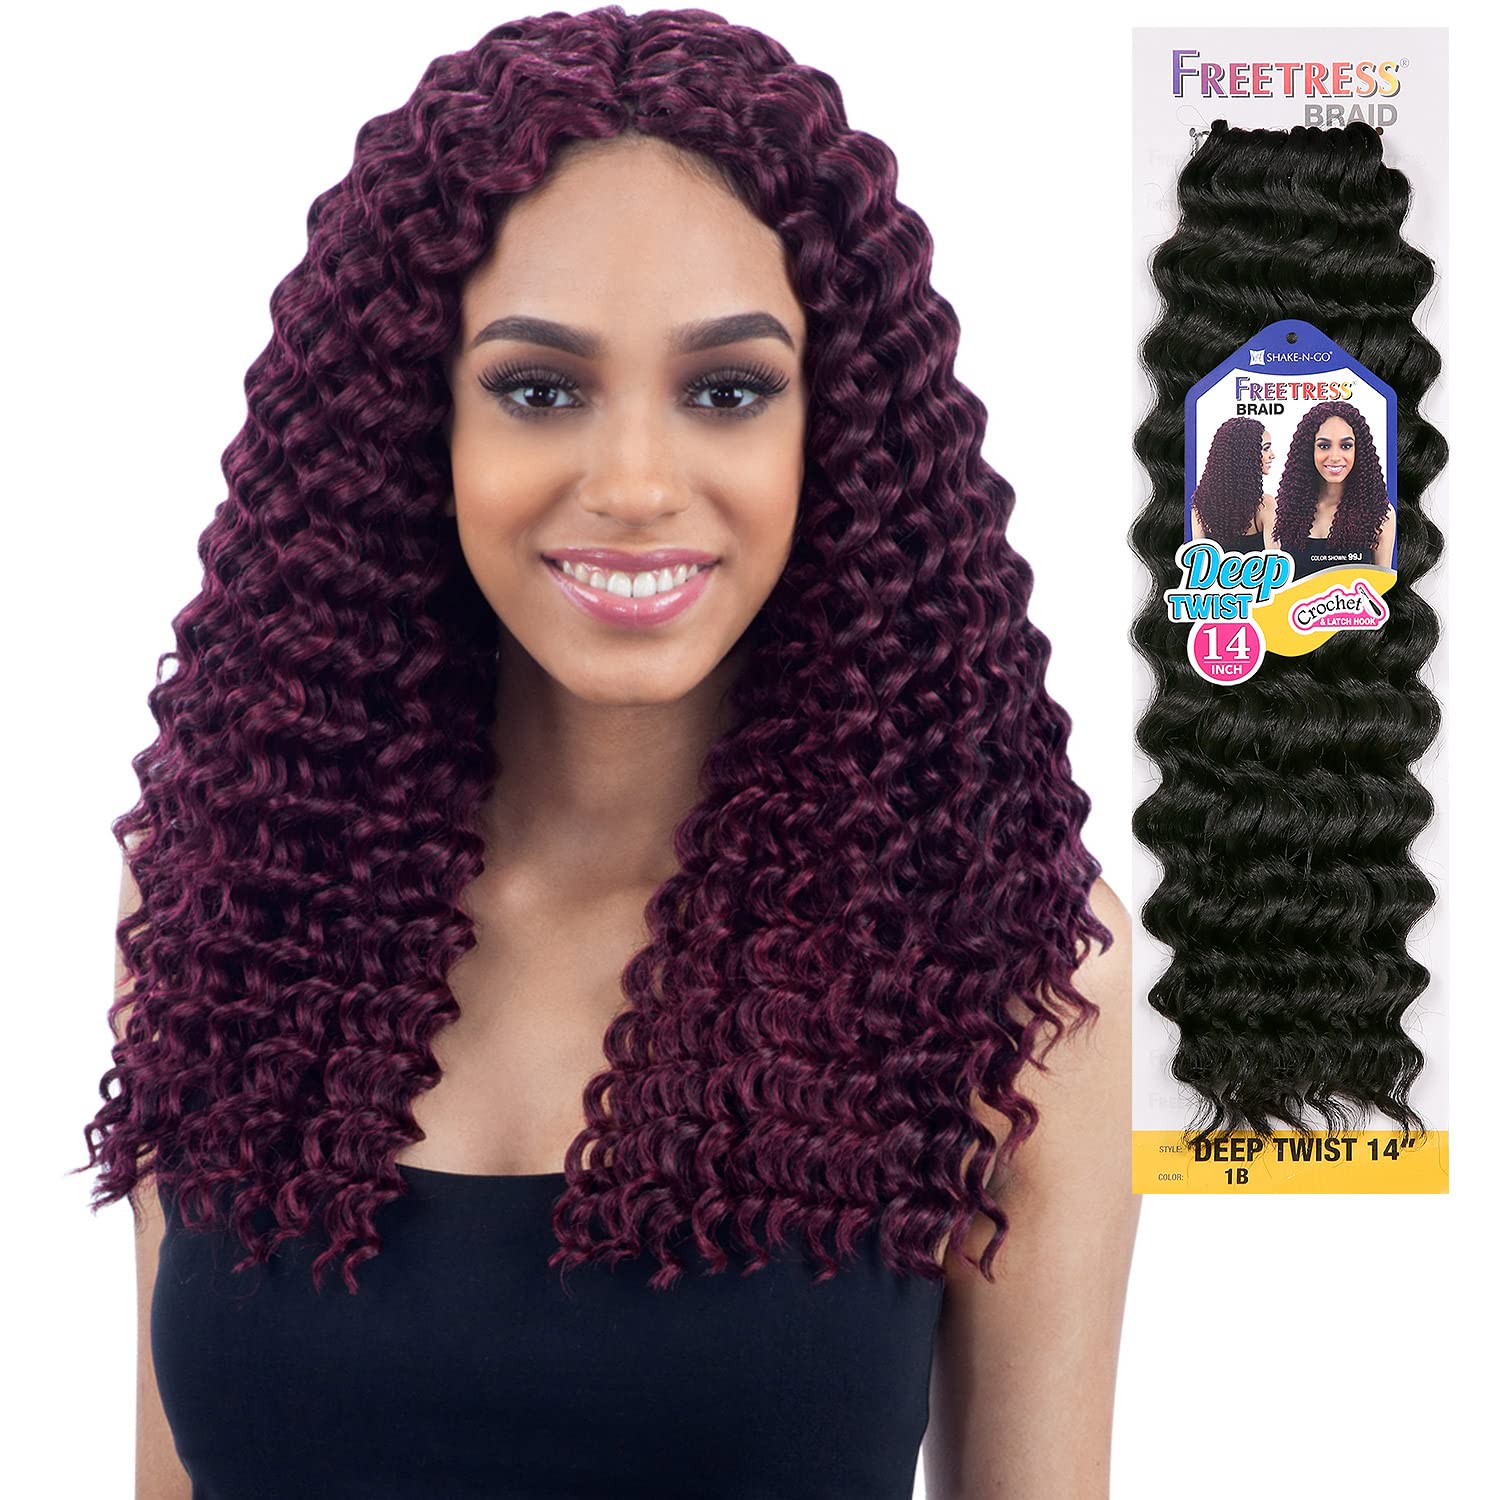 Shake-N-Go Freetress Crochet Hair - Deep Twist 14 Inches